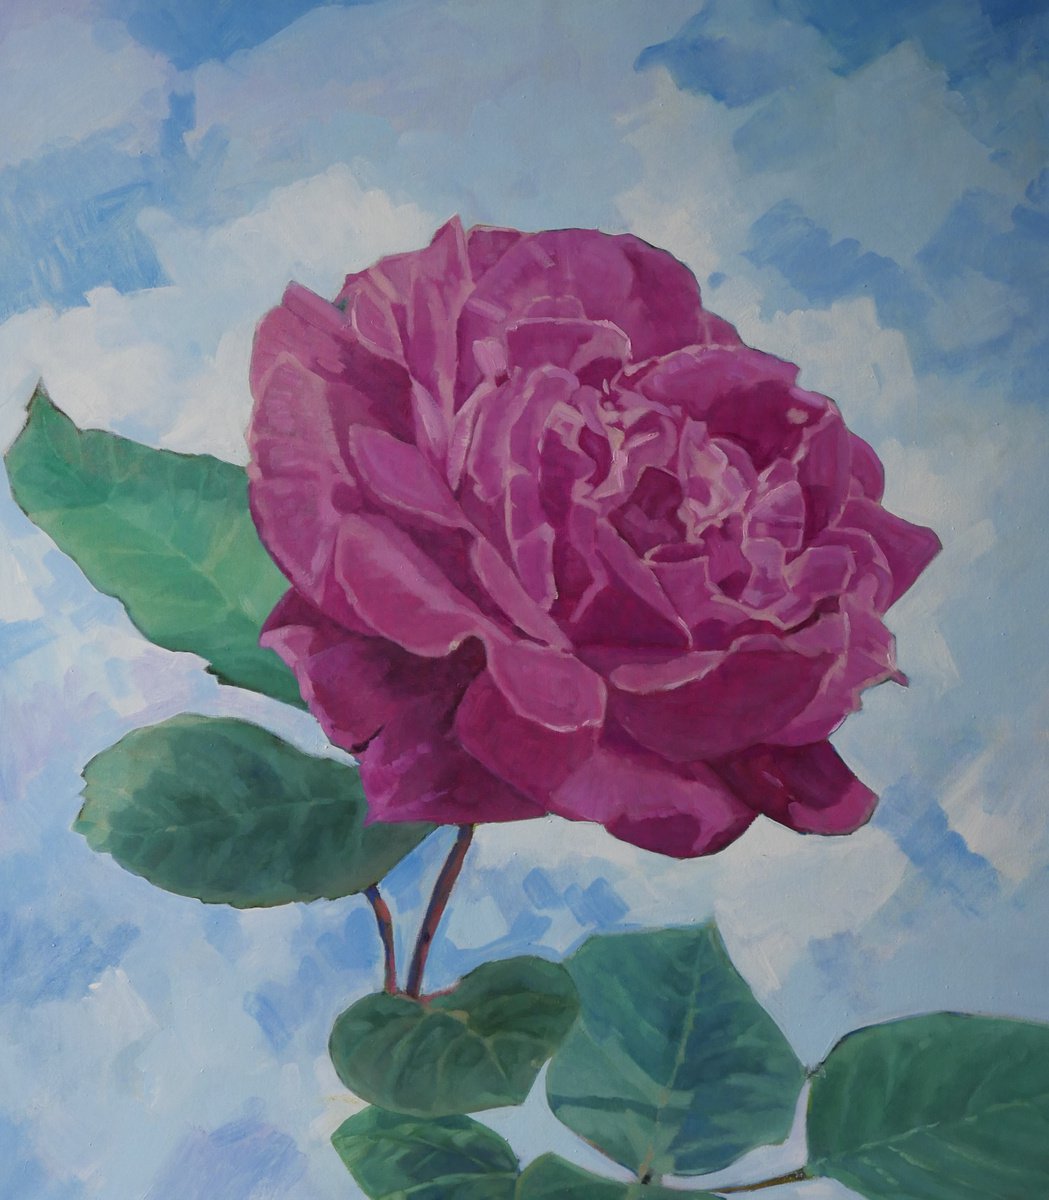 Rose by Susanna Montagnino